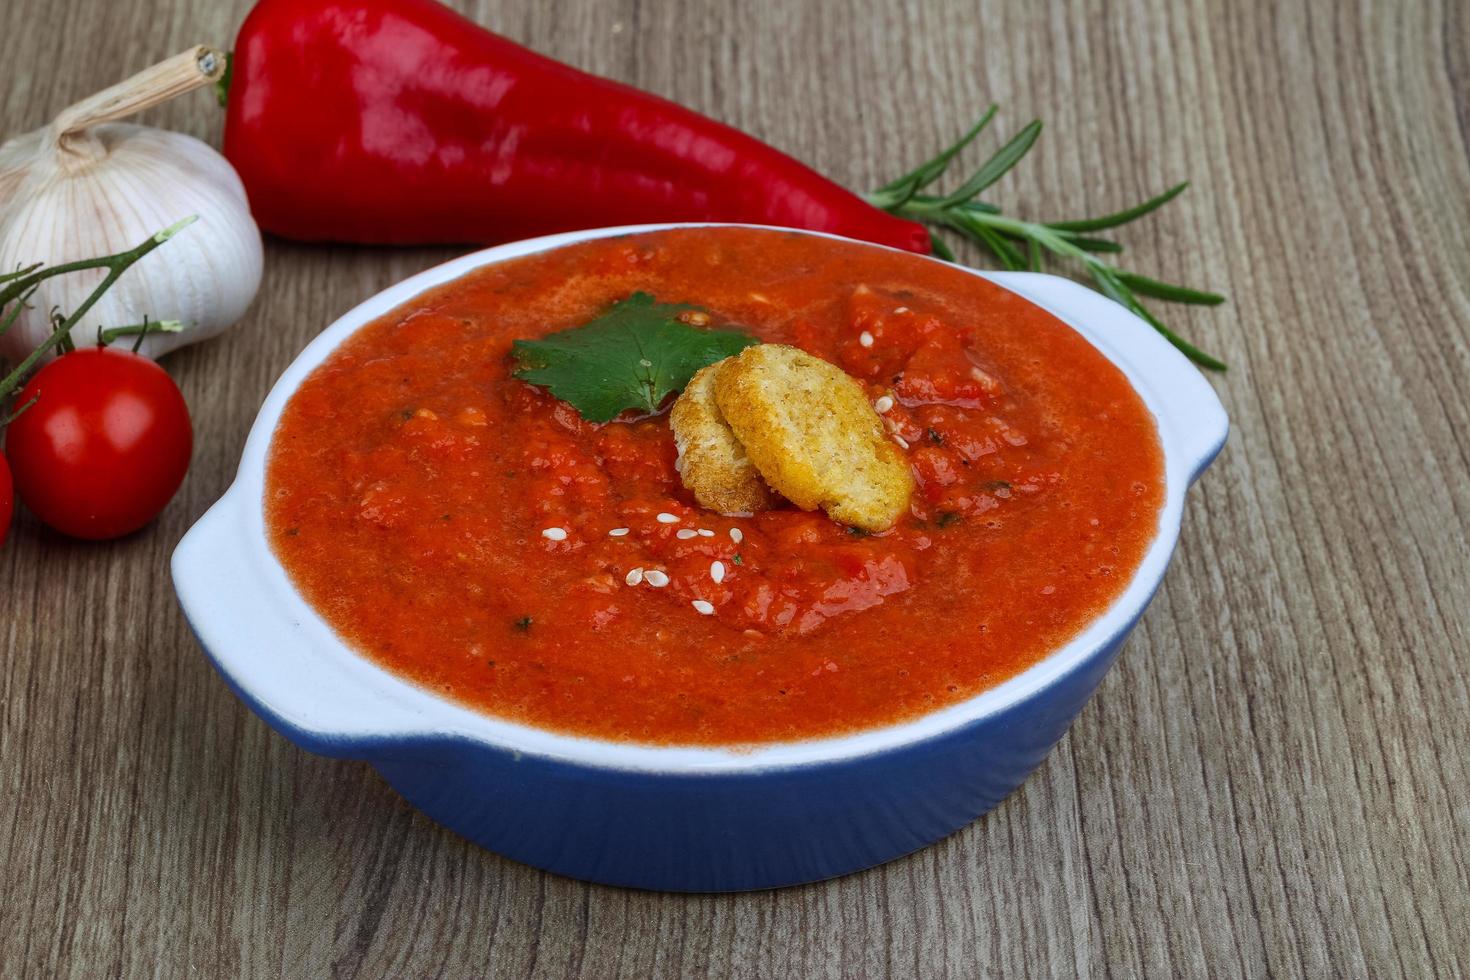 Spanish traditional soup - Gazpacho photo